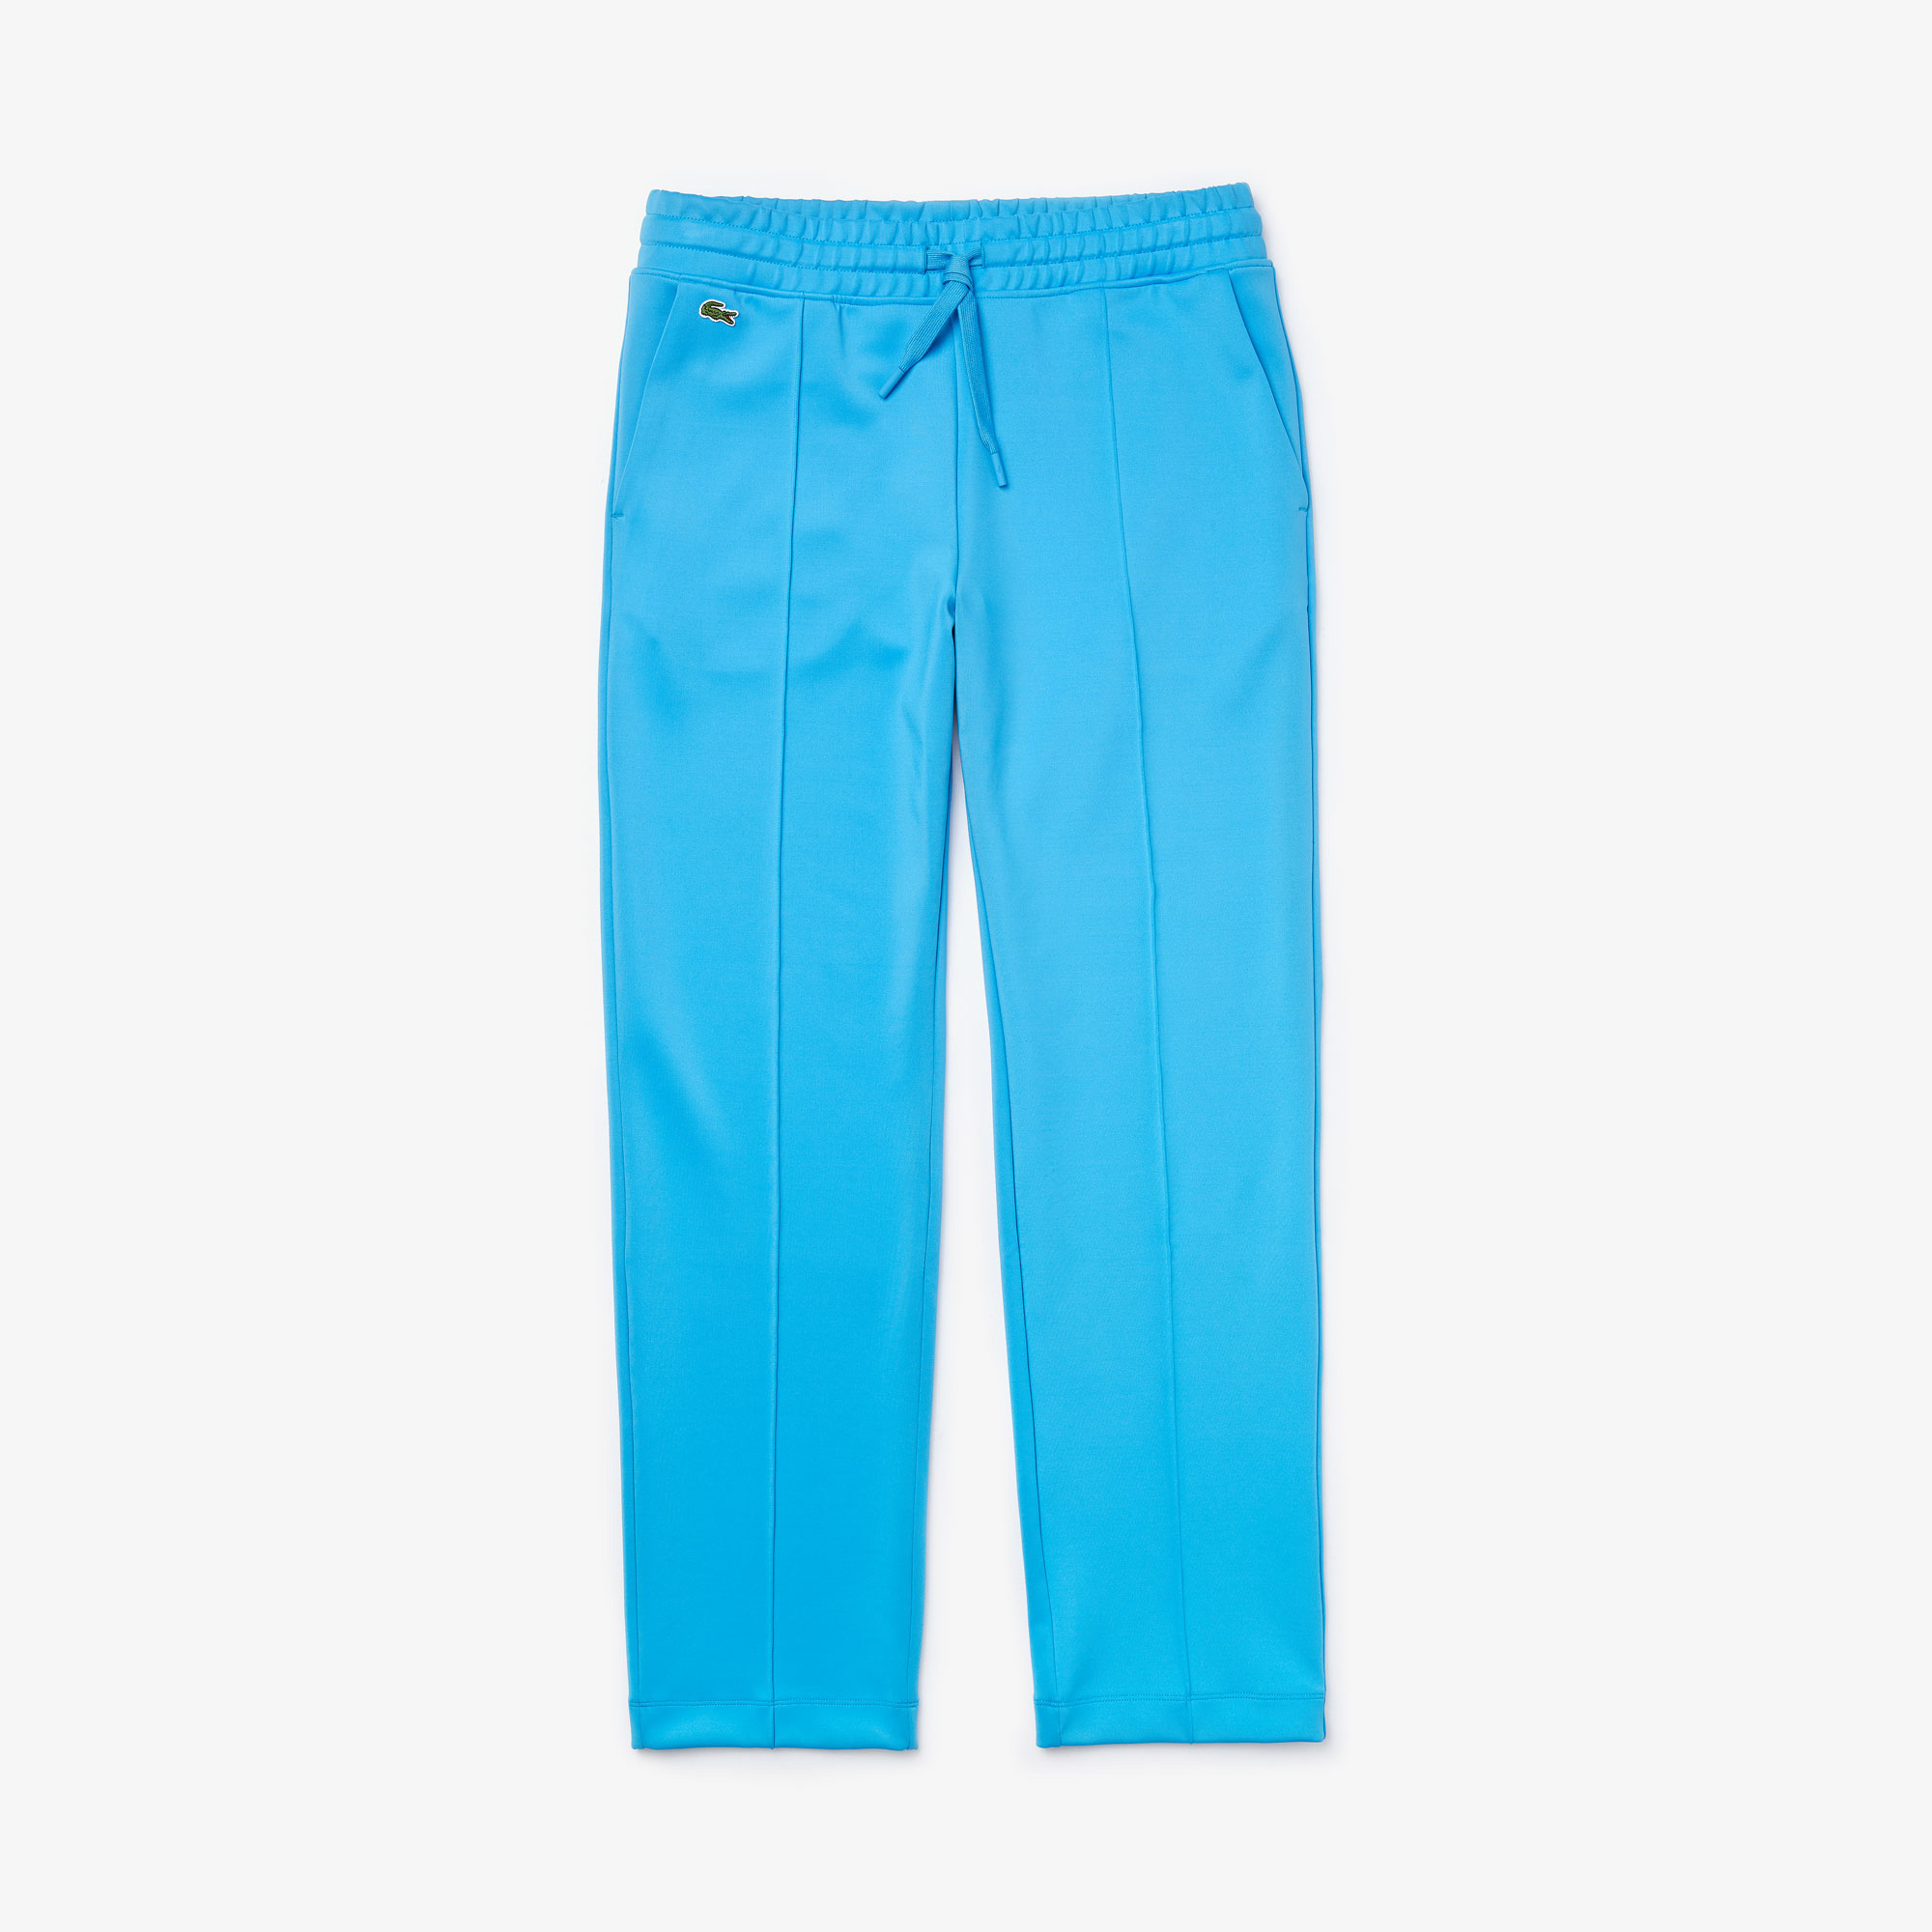 Lacoste Kadın Mavi Pantolon. 1